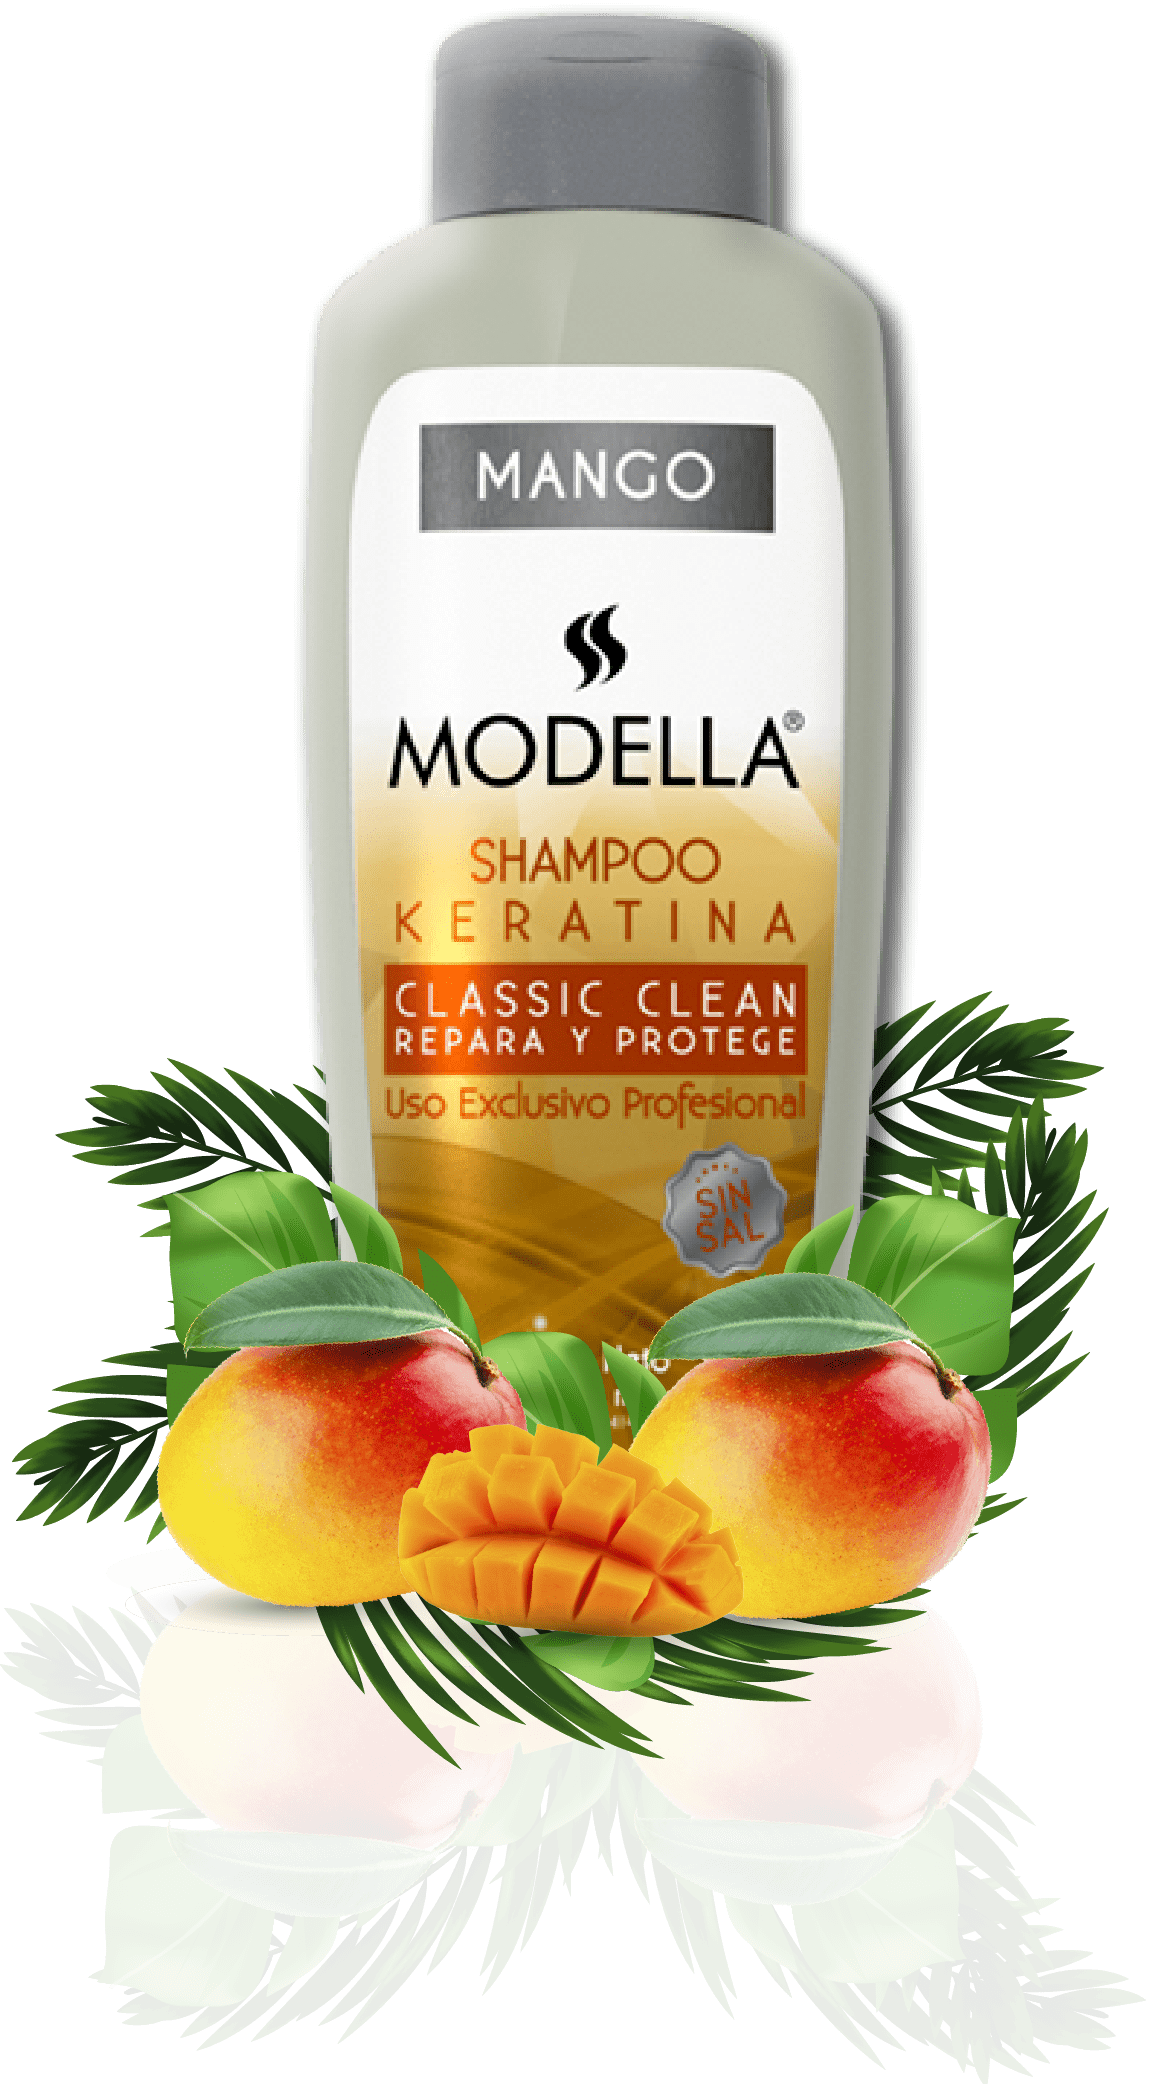 imagen-modella-shampoo-mango-keratina-sin-sal-repara-protege-responsive